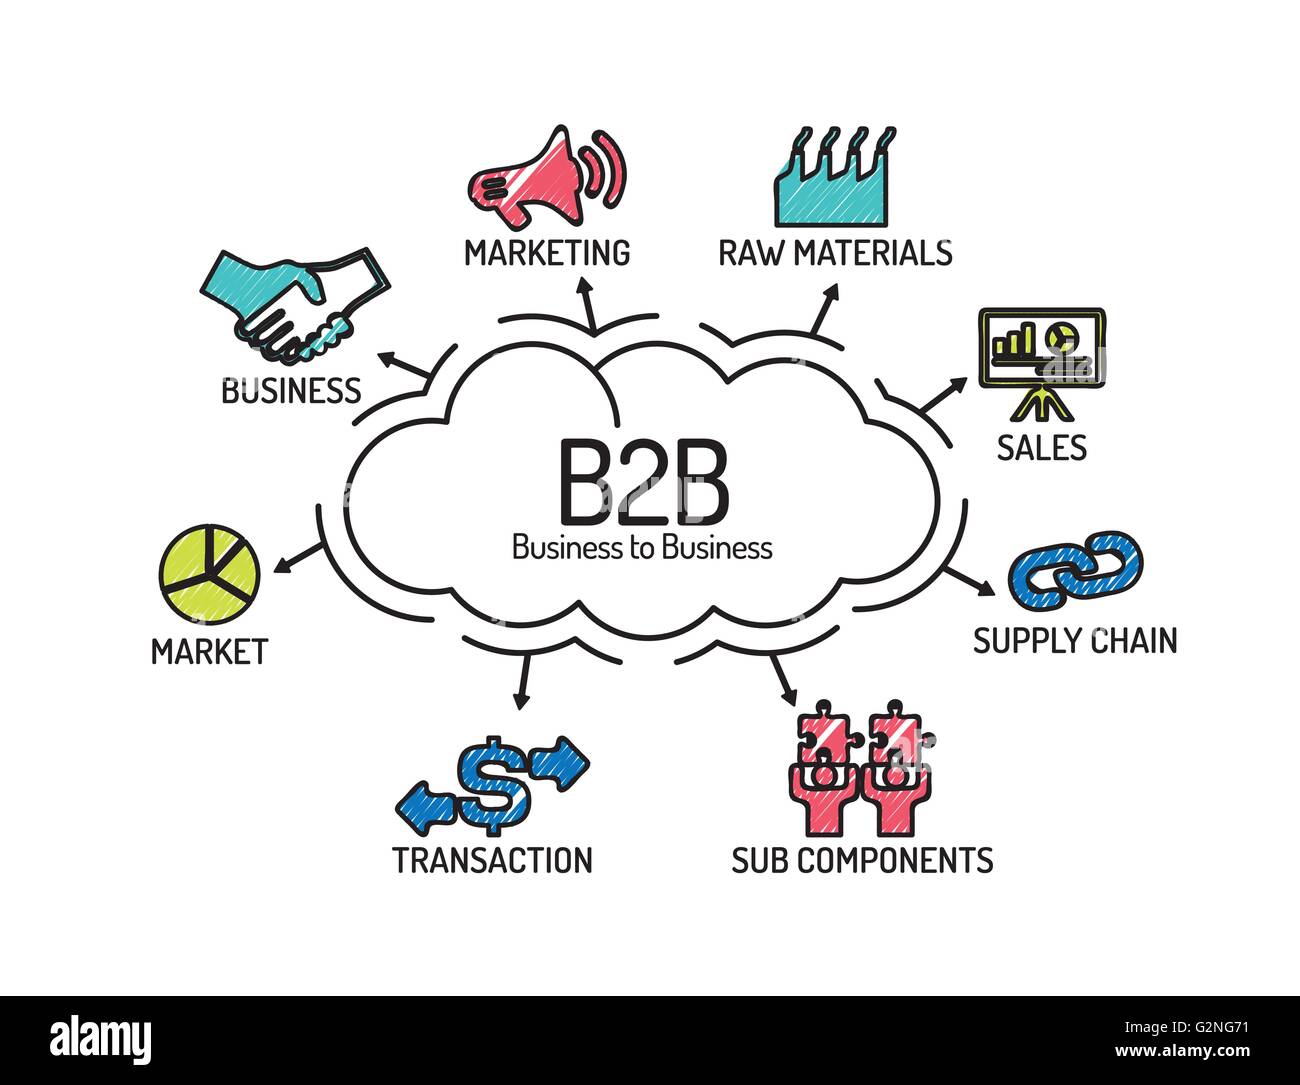 b2b business model images